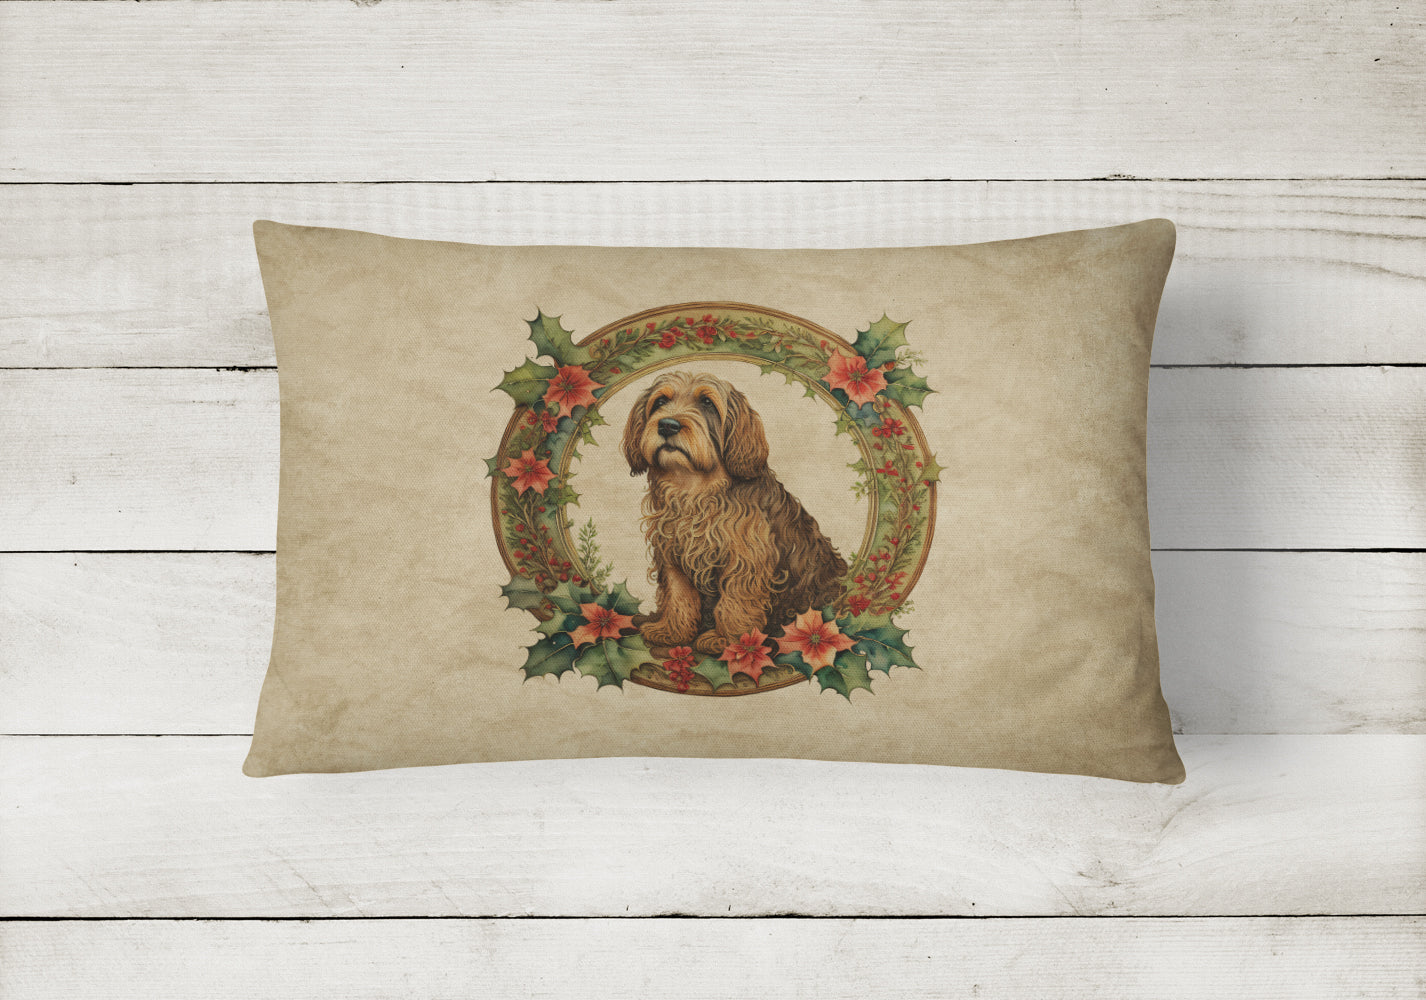 Buy this Otterhound Christmas Flowers Throw Pillow